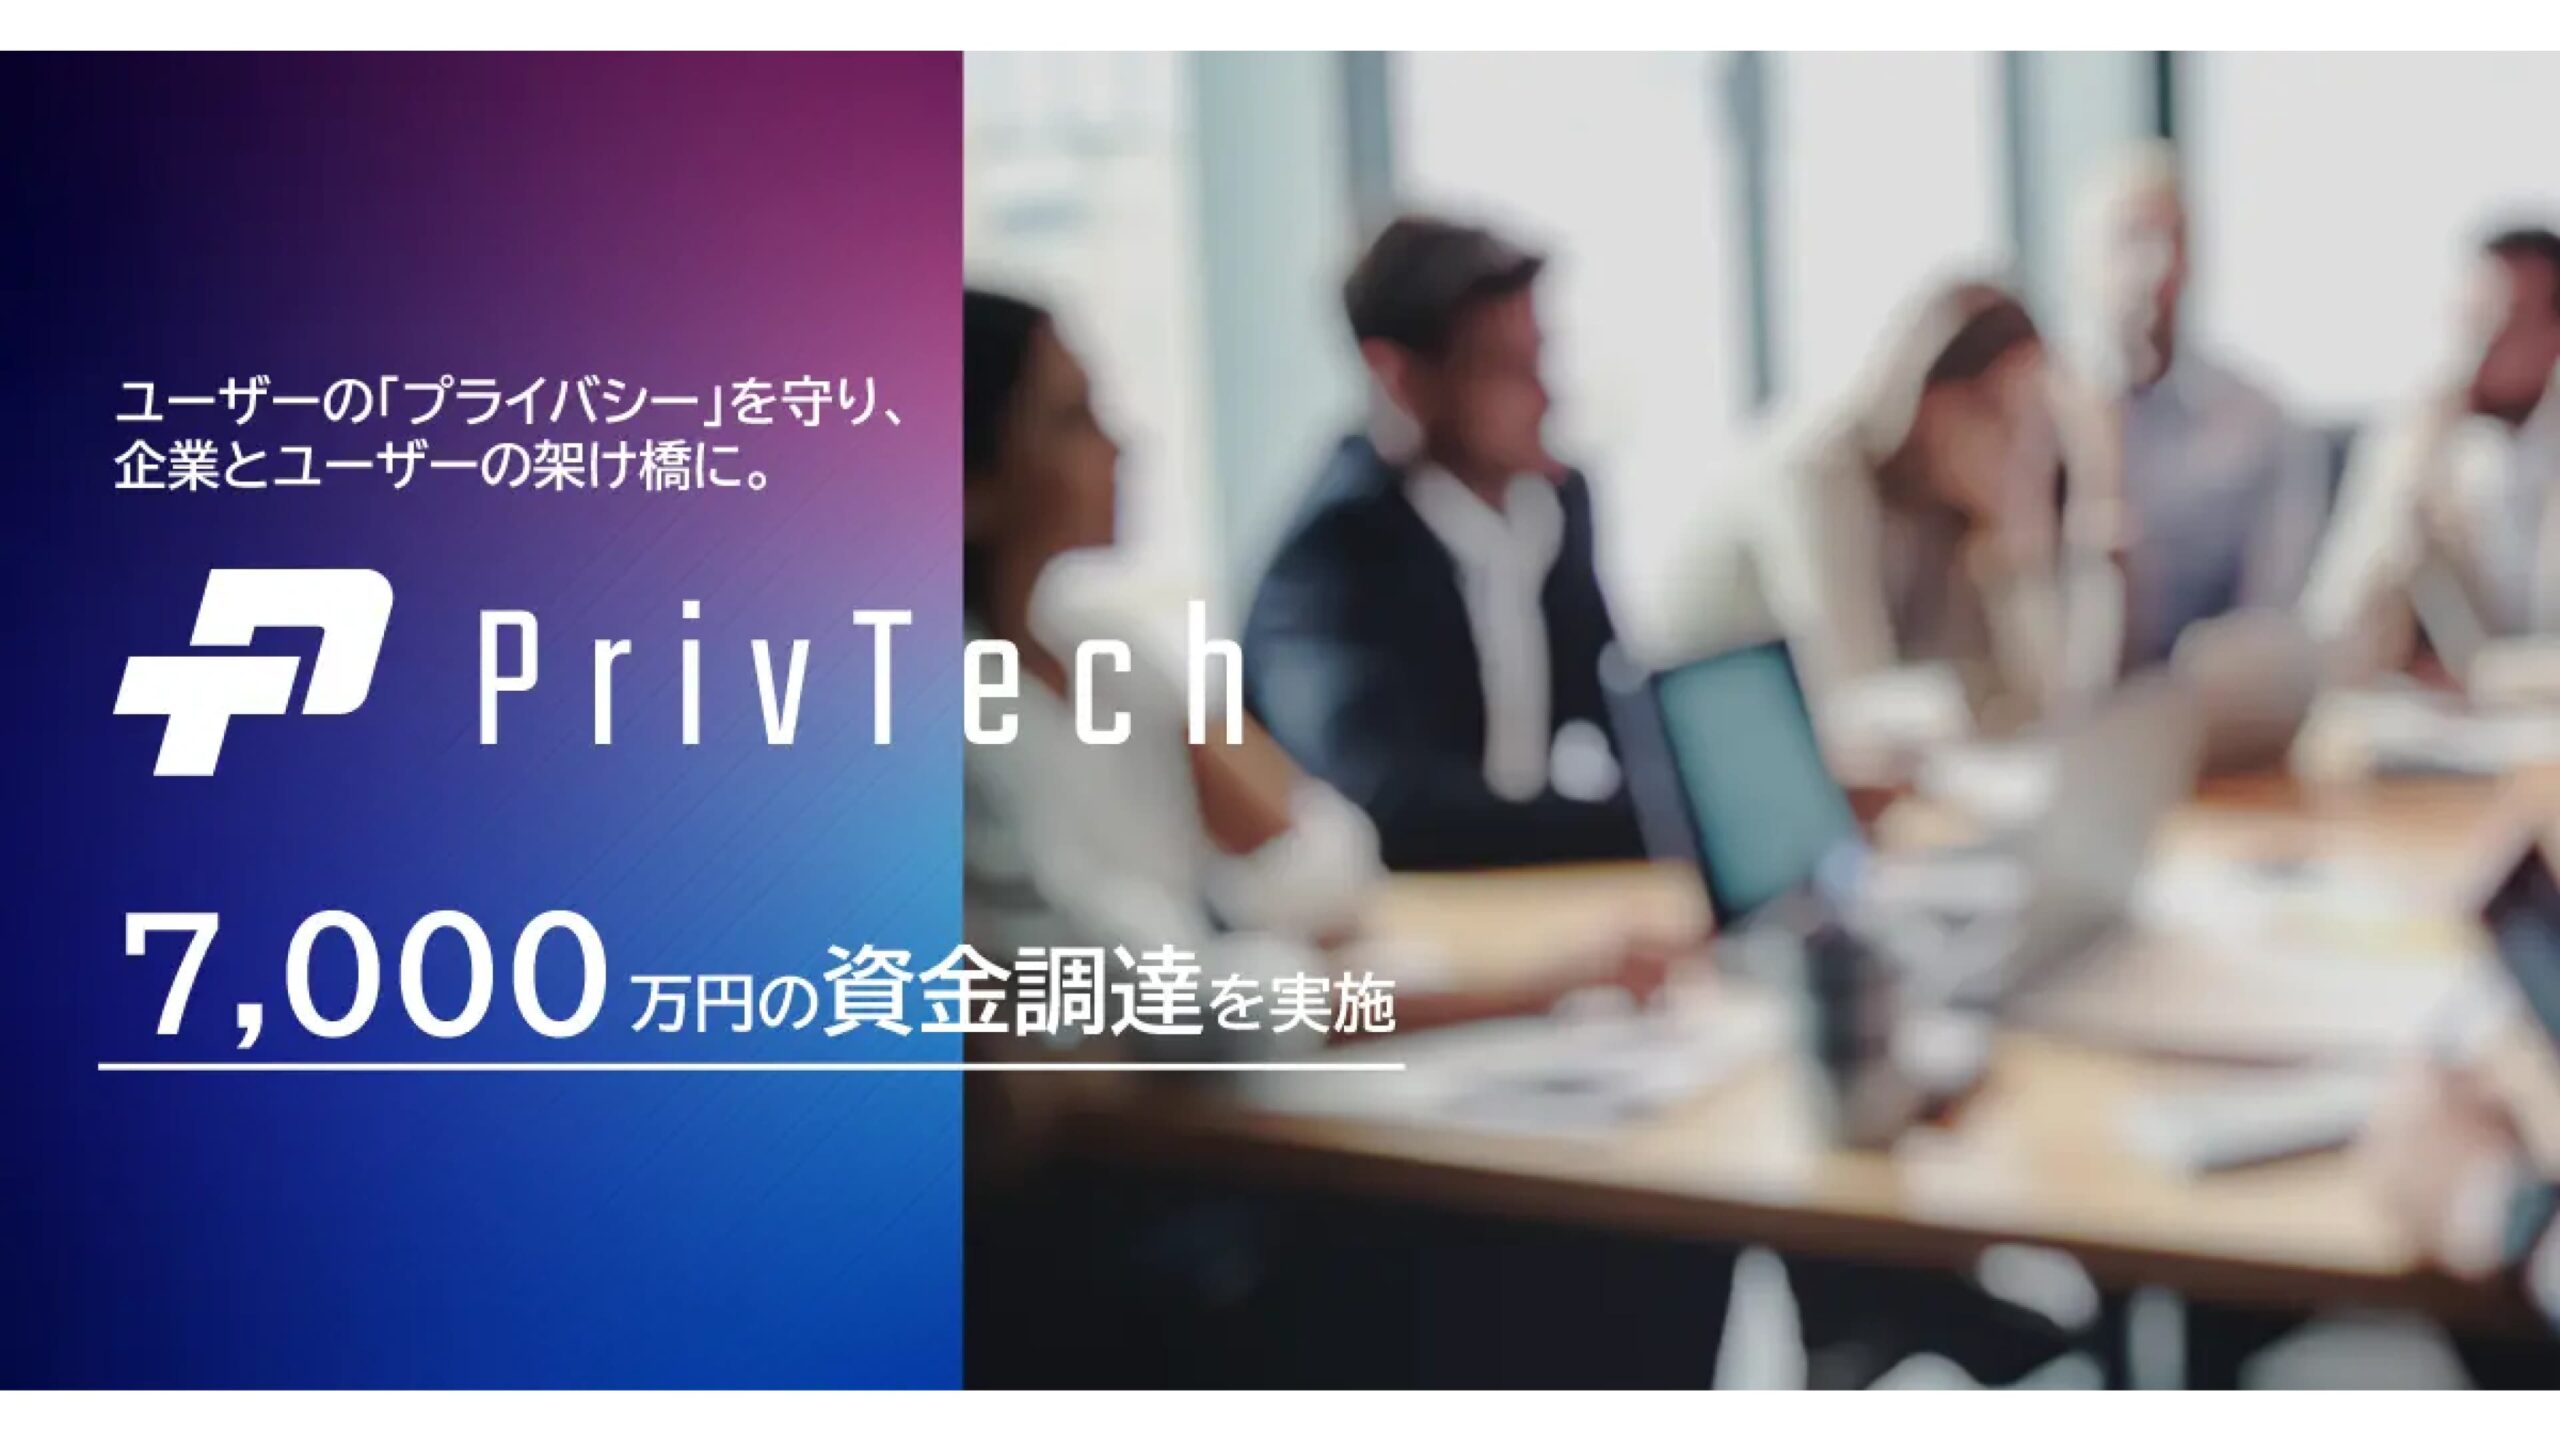 Priv Tech、J-KISS型新株予約権発行で7,000万円の資金調達を実施